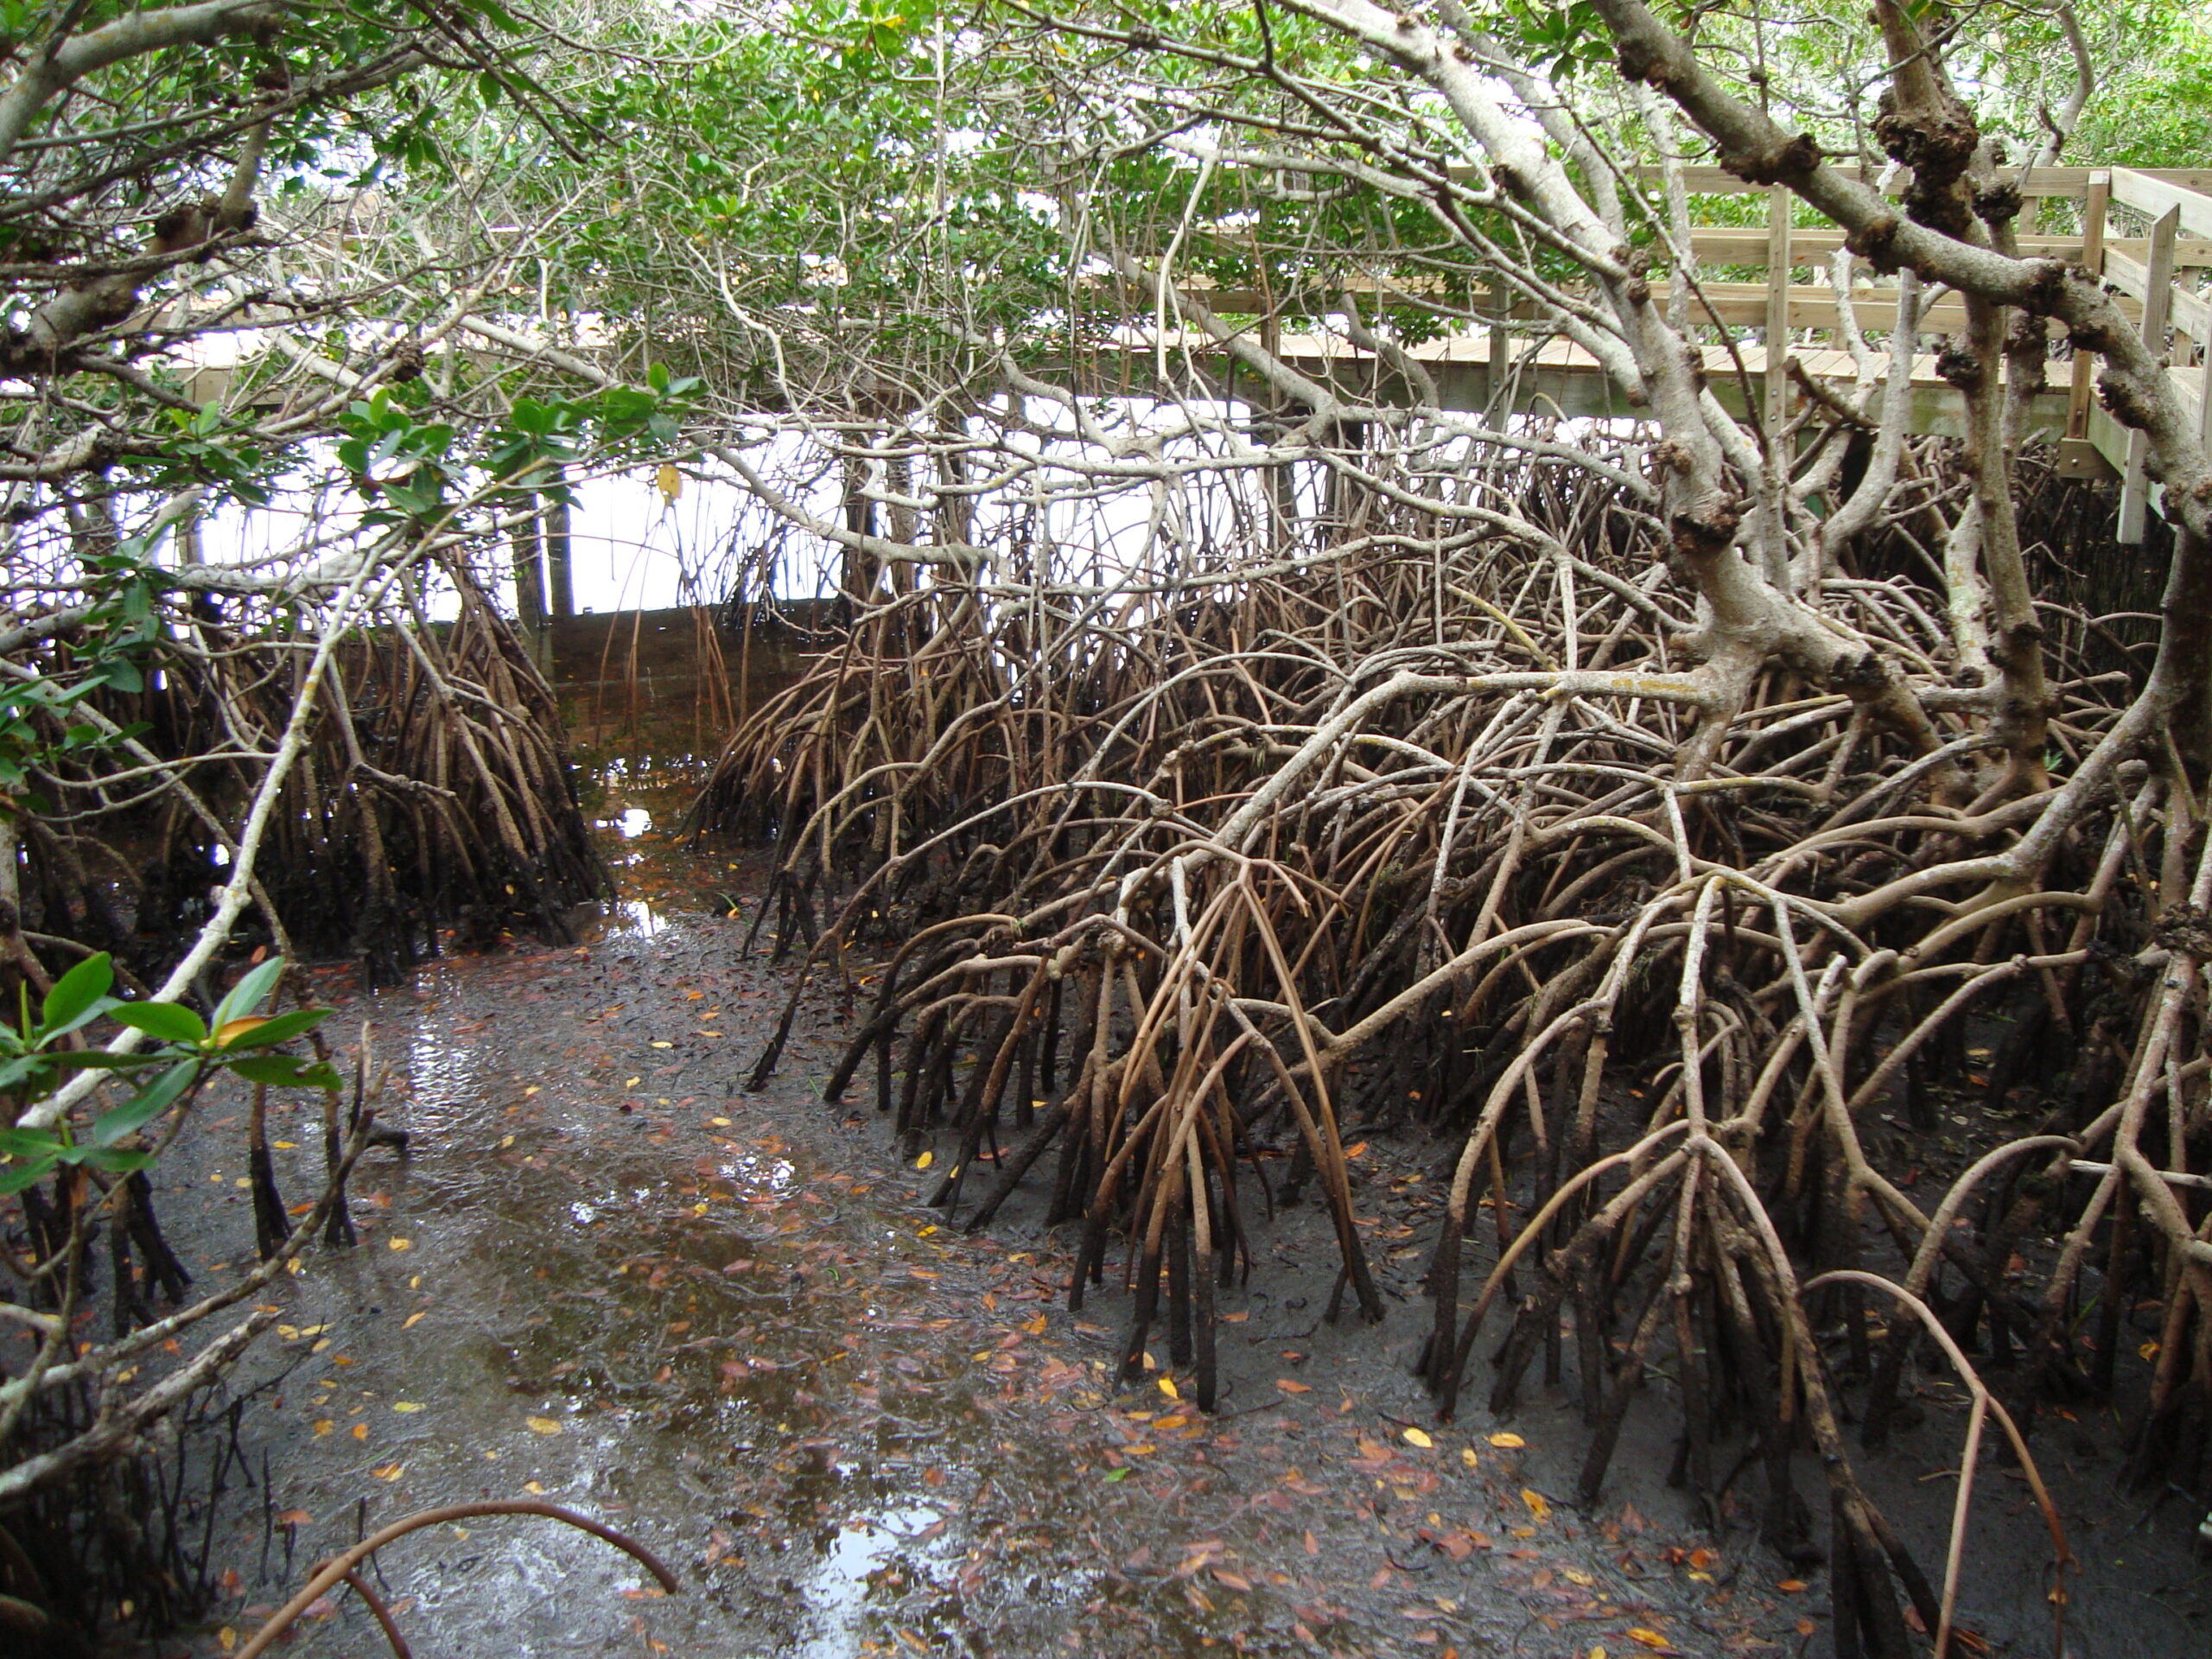 Mangroves in Leffis Key Preserve along the Coquina Baywalk.